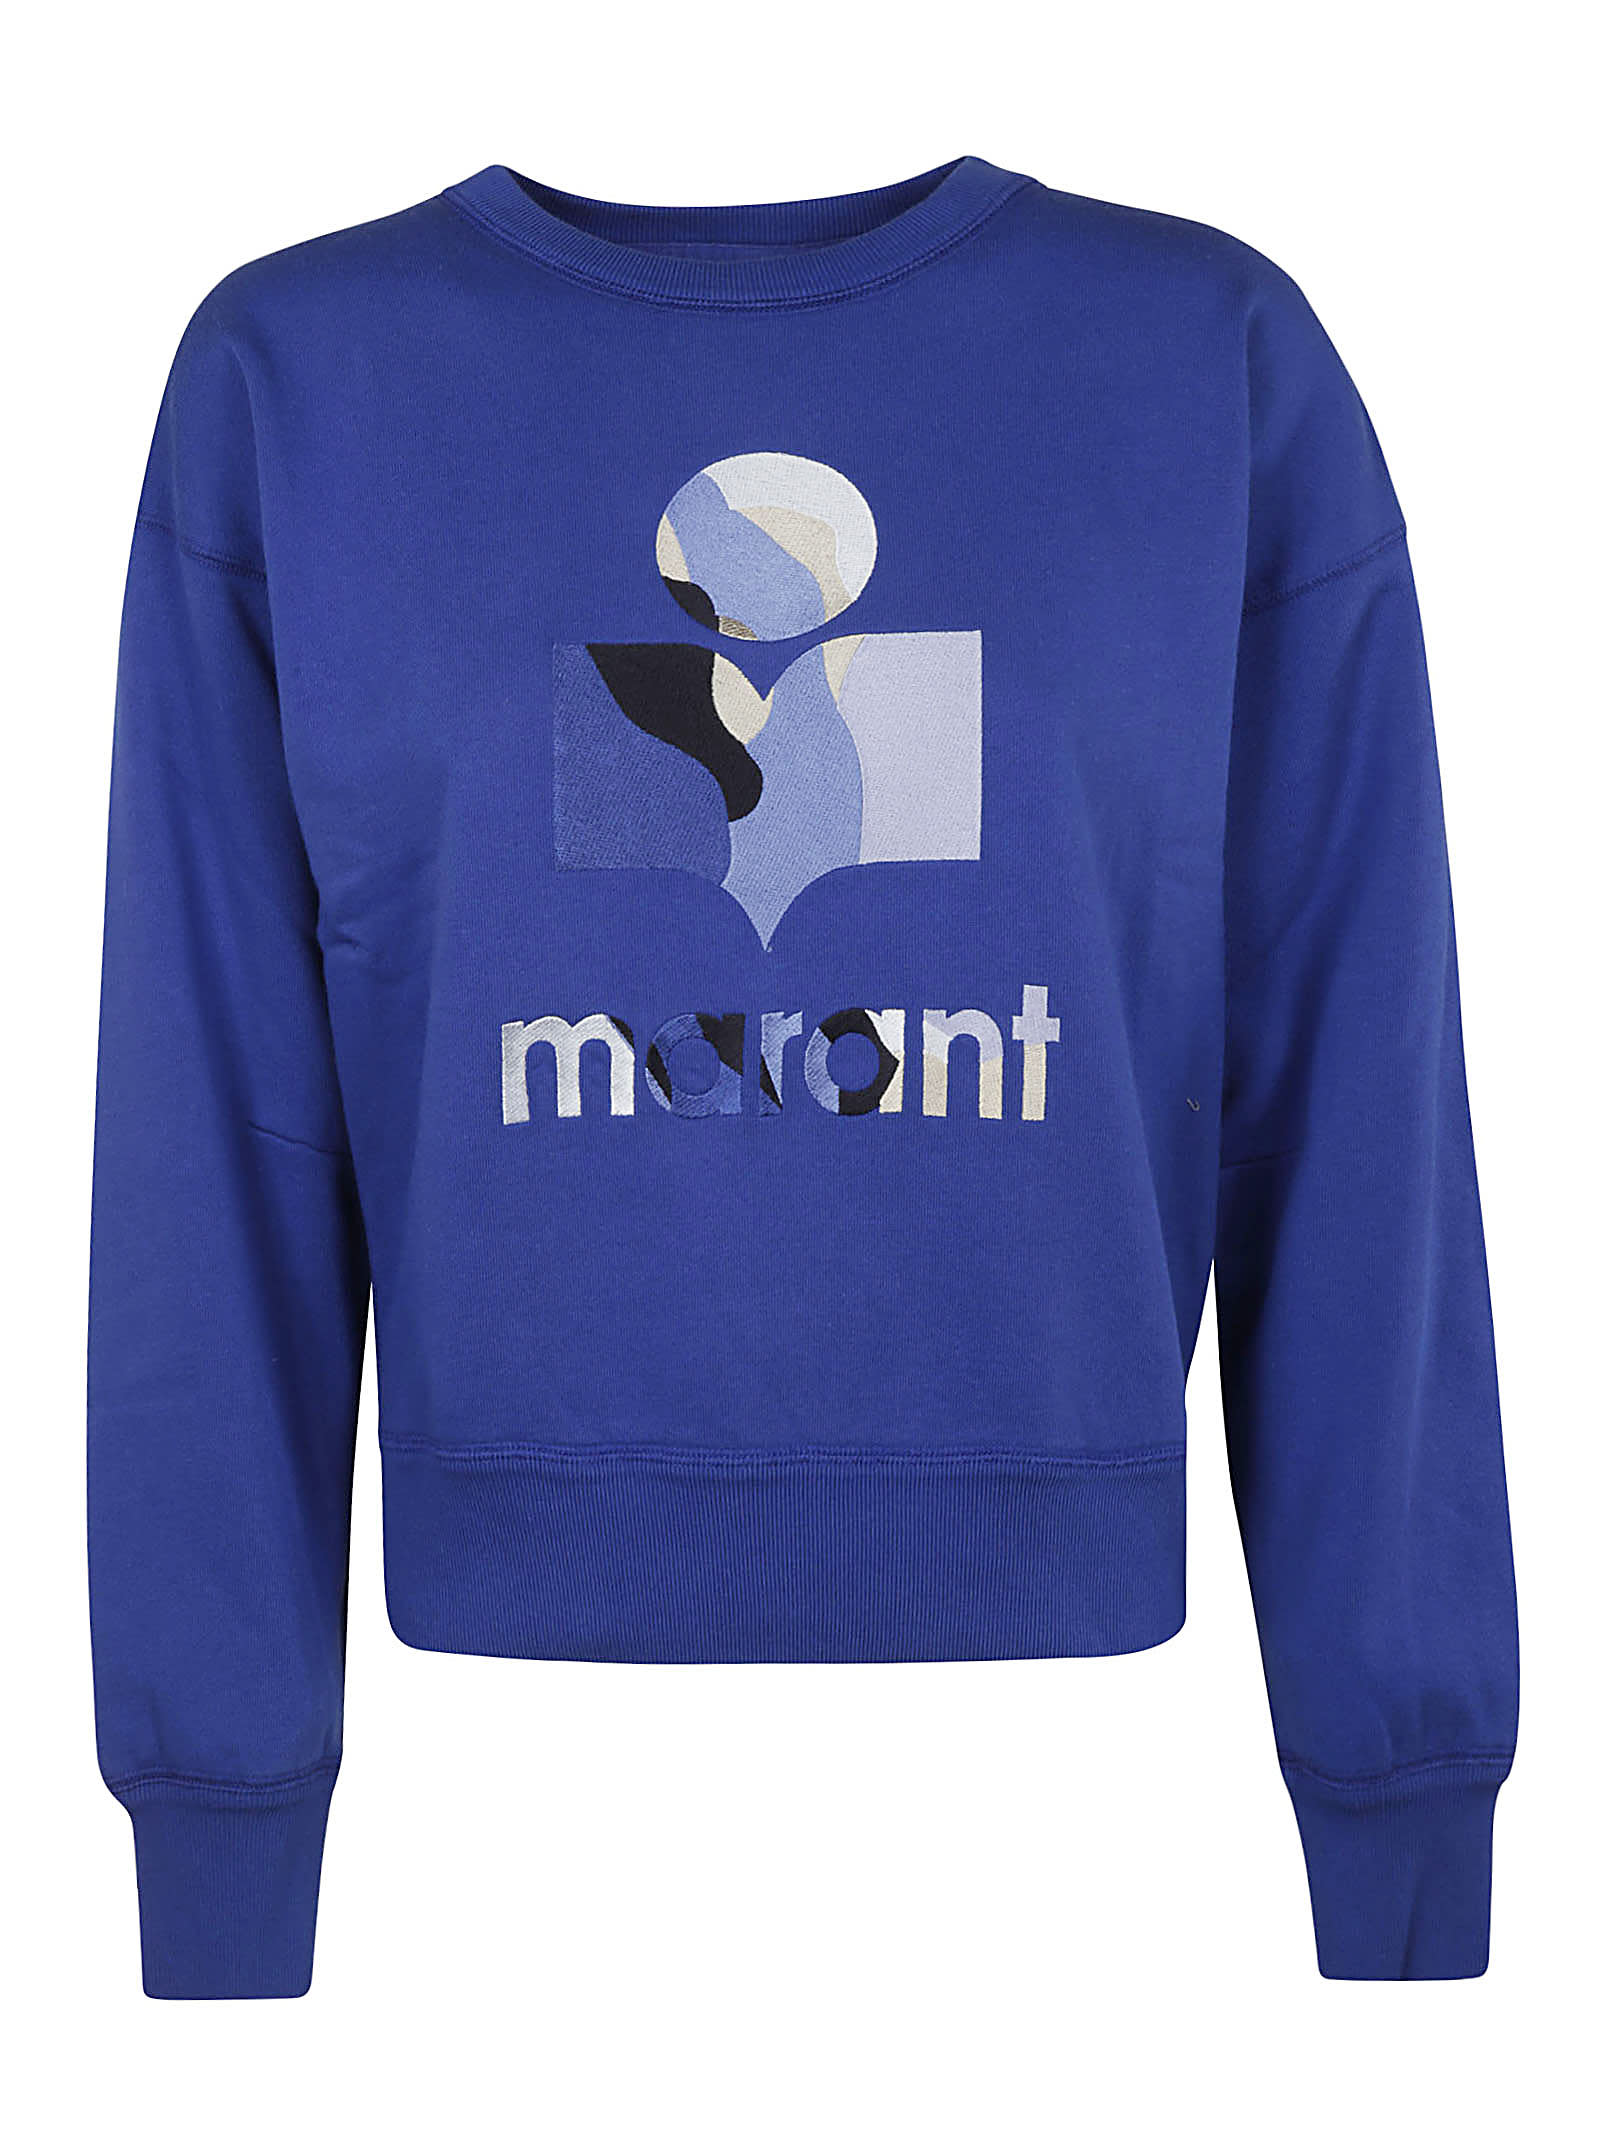 Isabel Marant Mobyli Sweatshirt